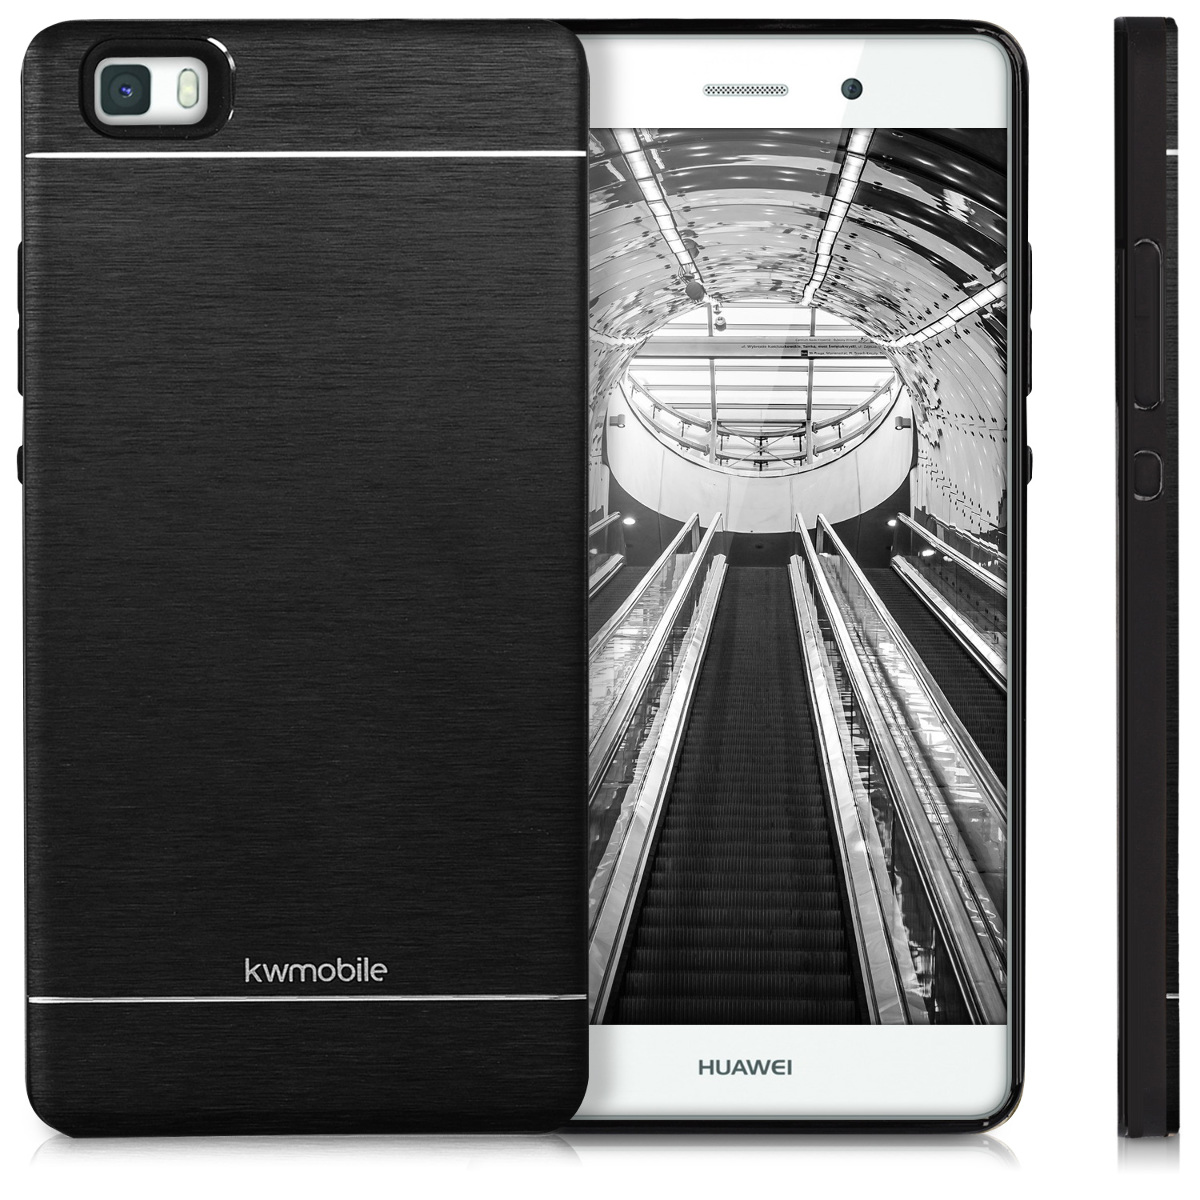 kwmobile Huawei P8 Lite Custodia in Silicone TPU Trasparente Bianco/Nero 2017 Cover 2017 Back Case per Huawei P8 Lite